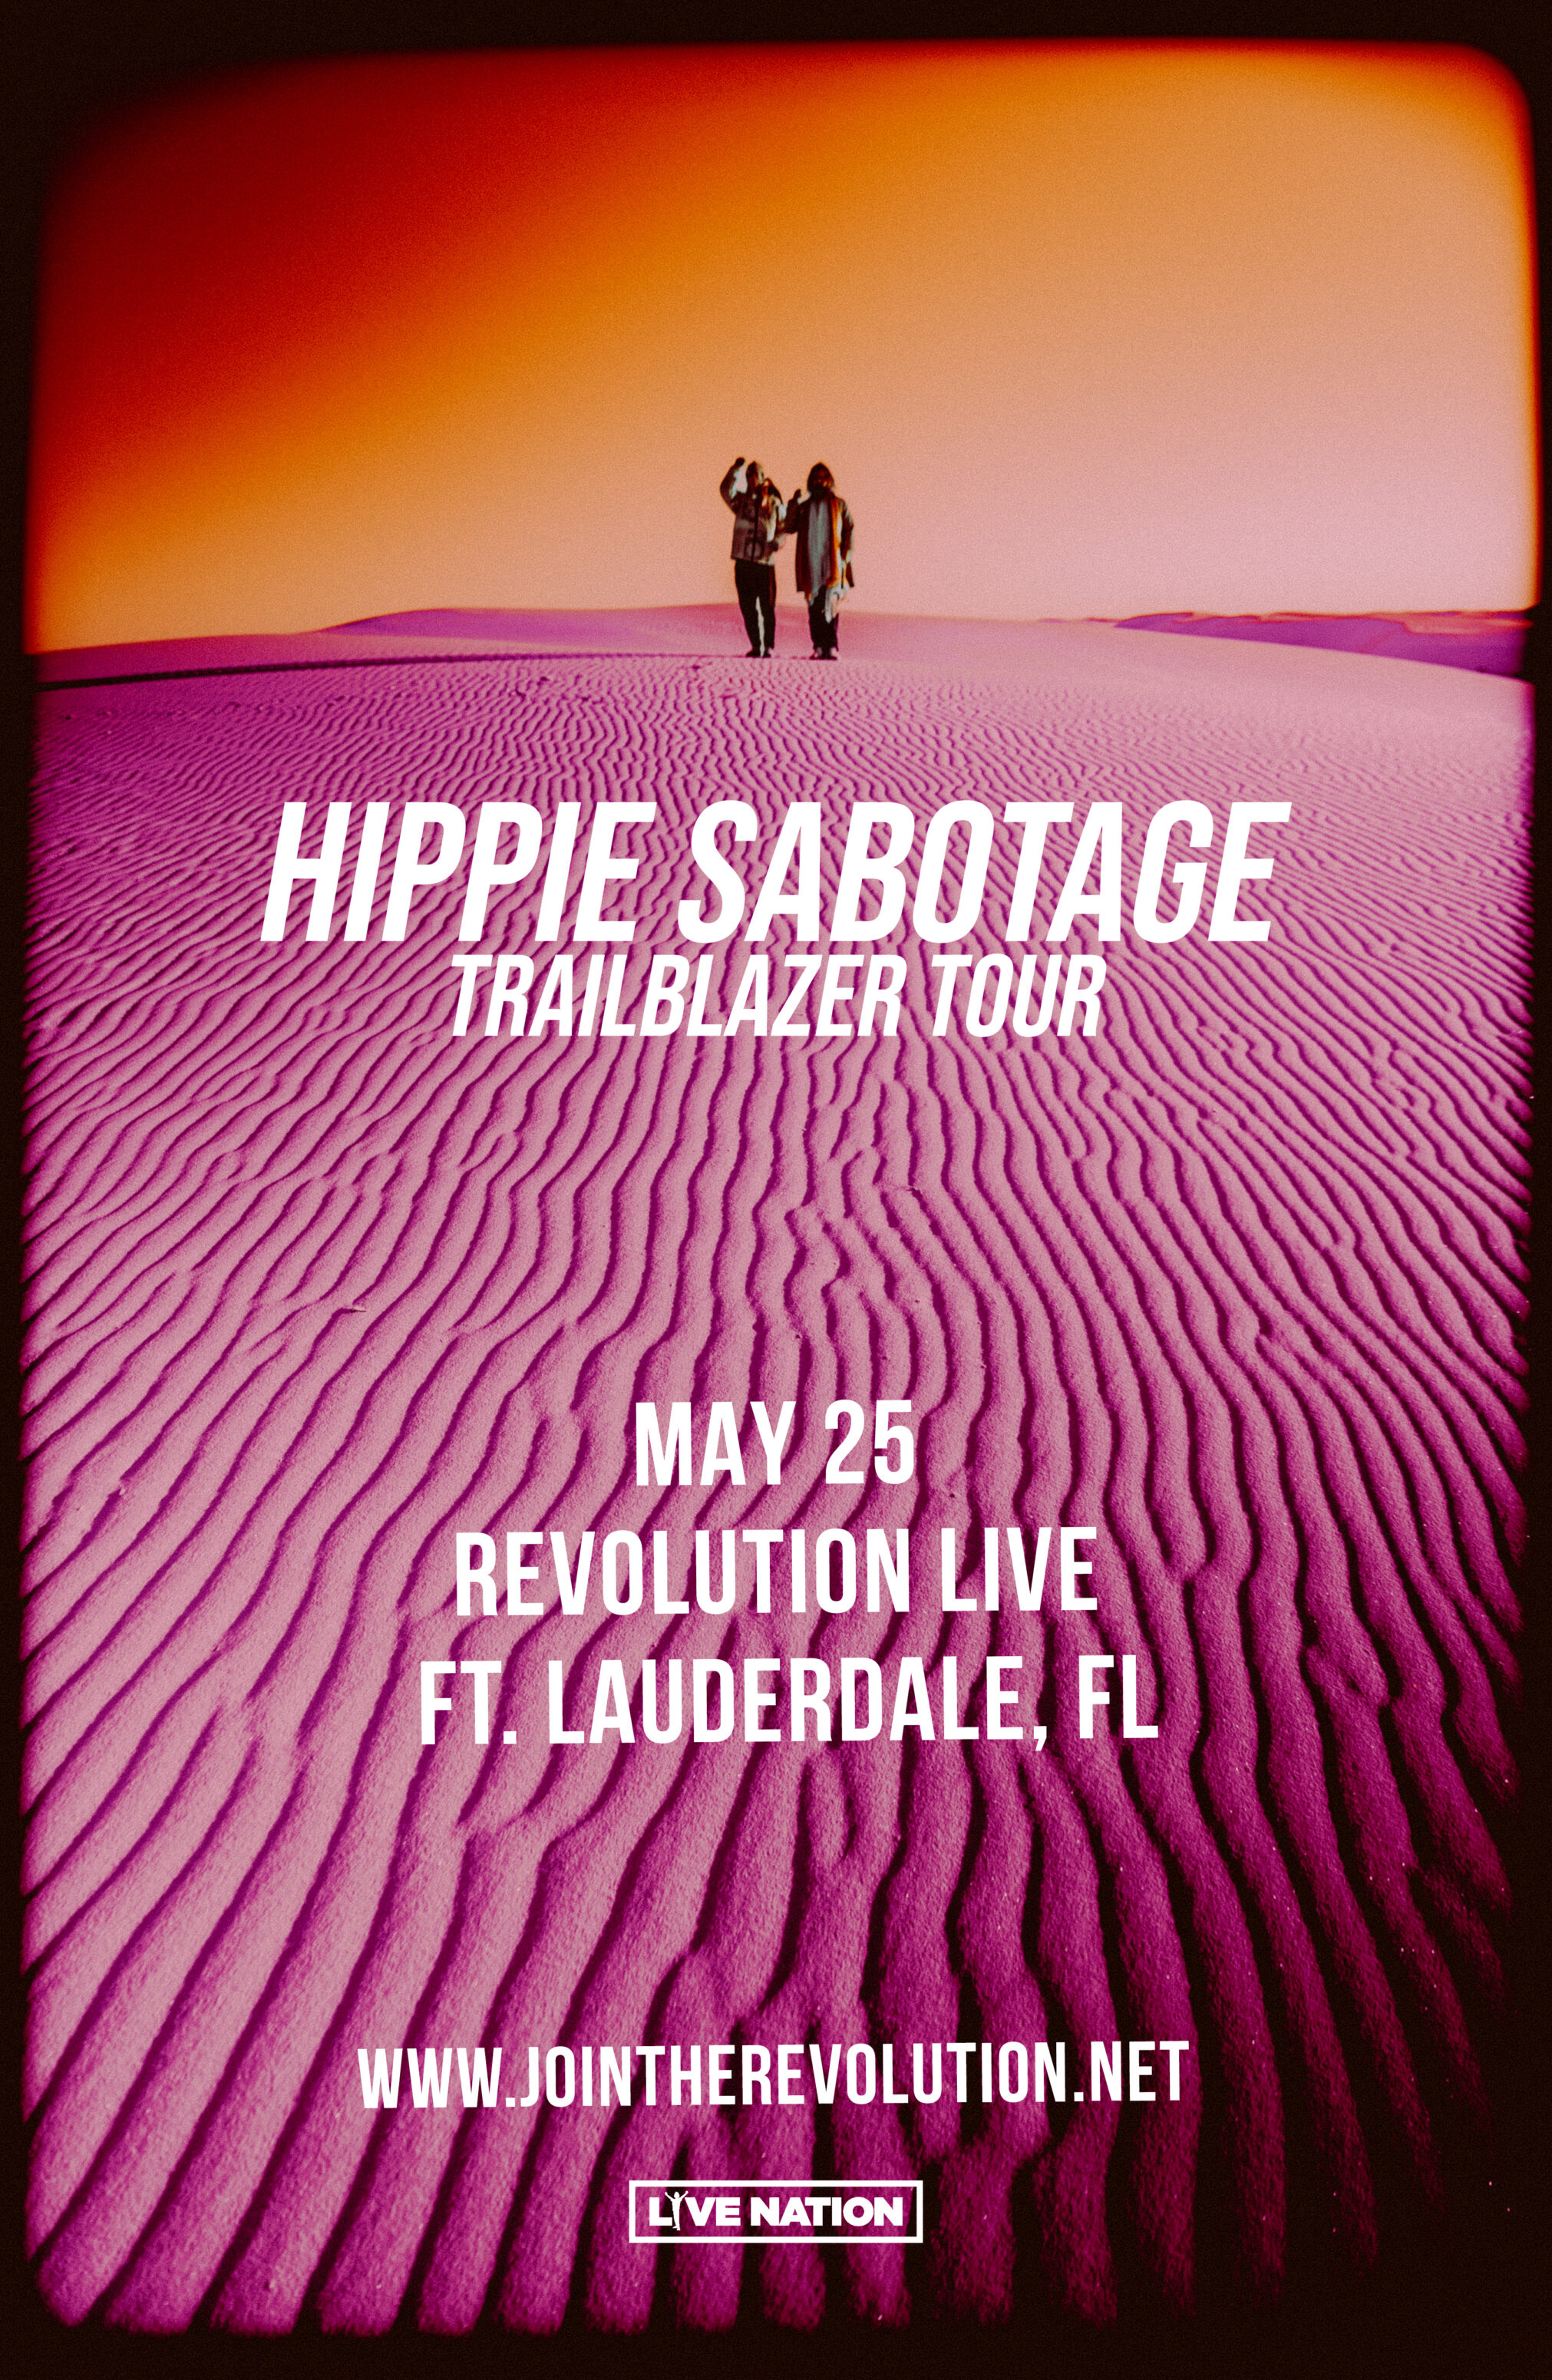 Hippie Sabotage – The Trailblazer Tour